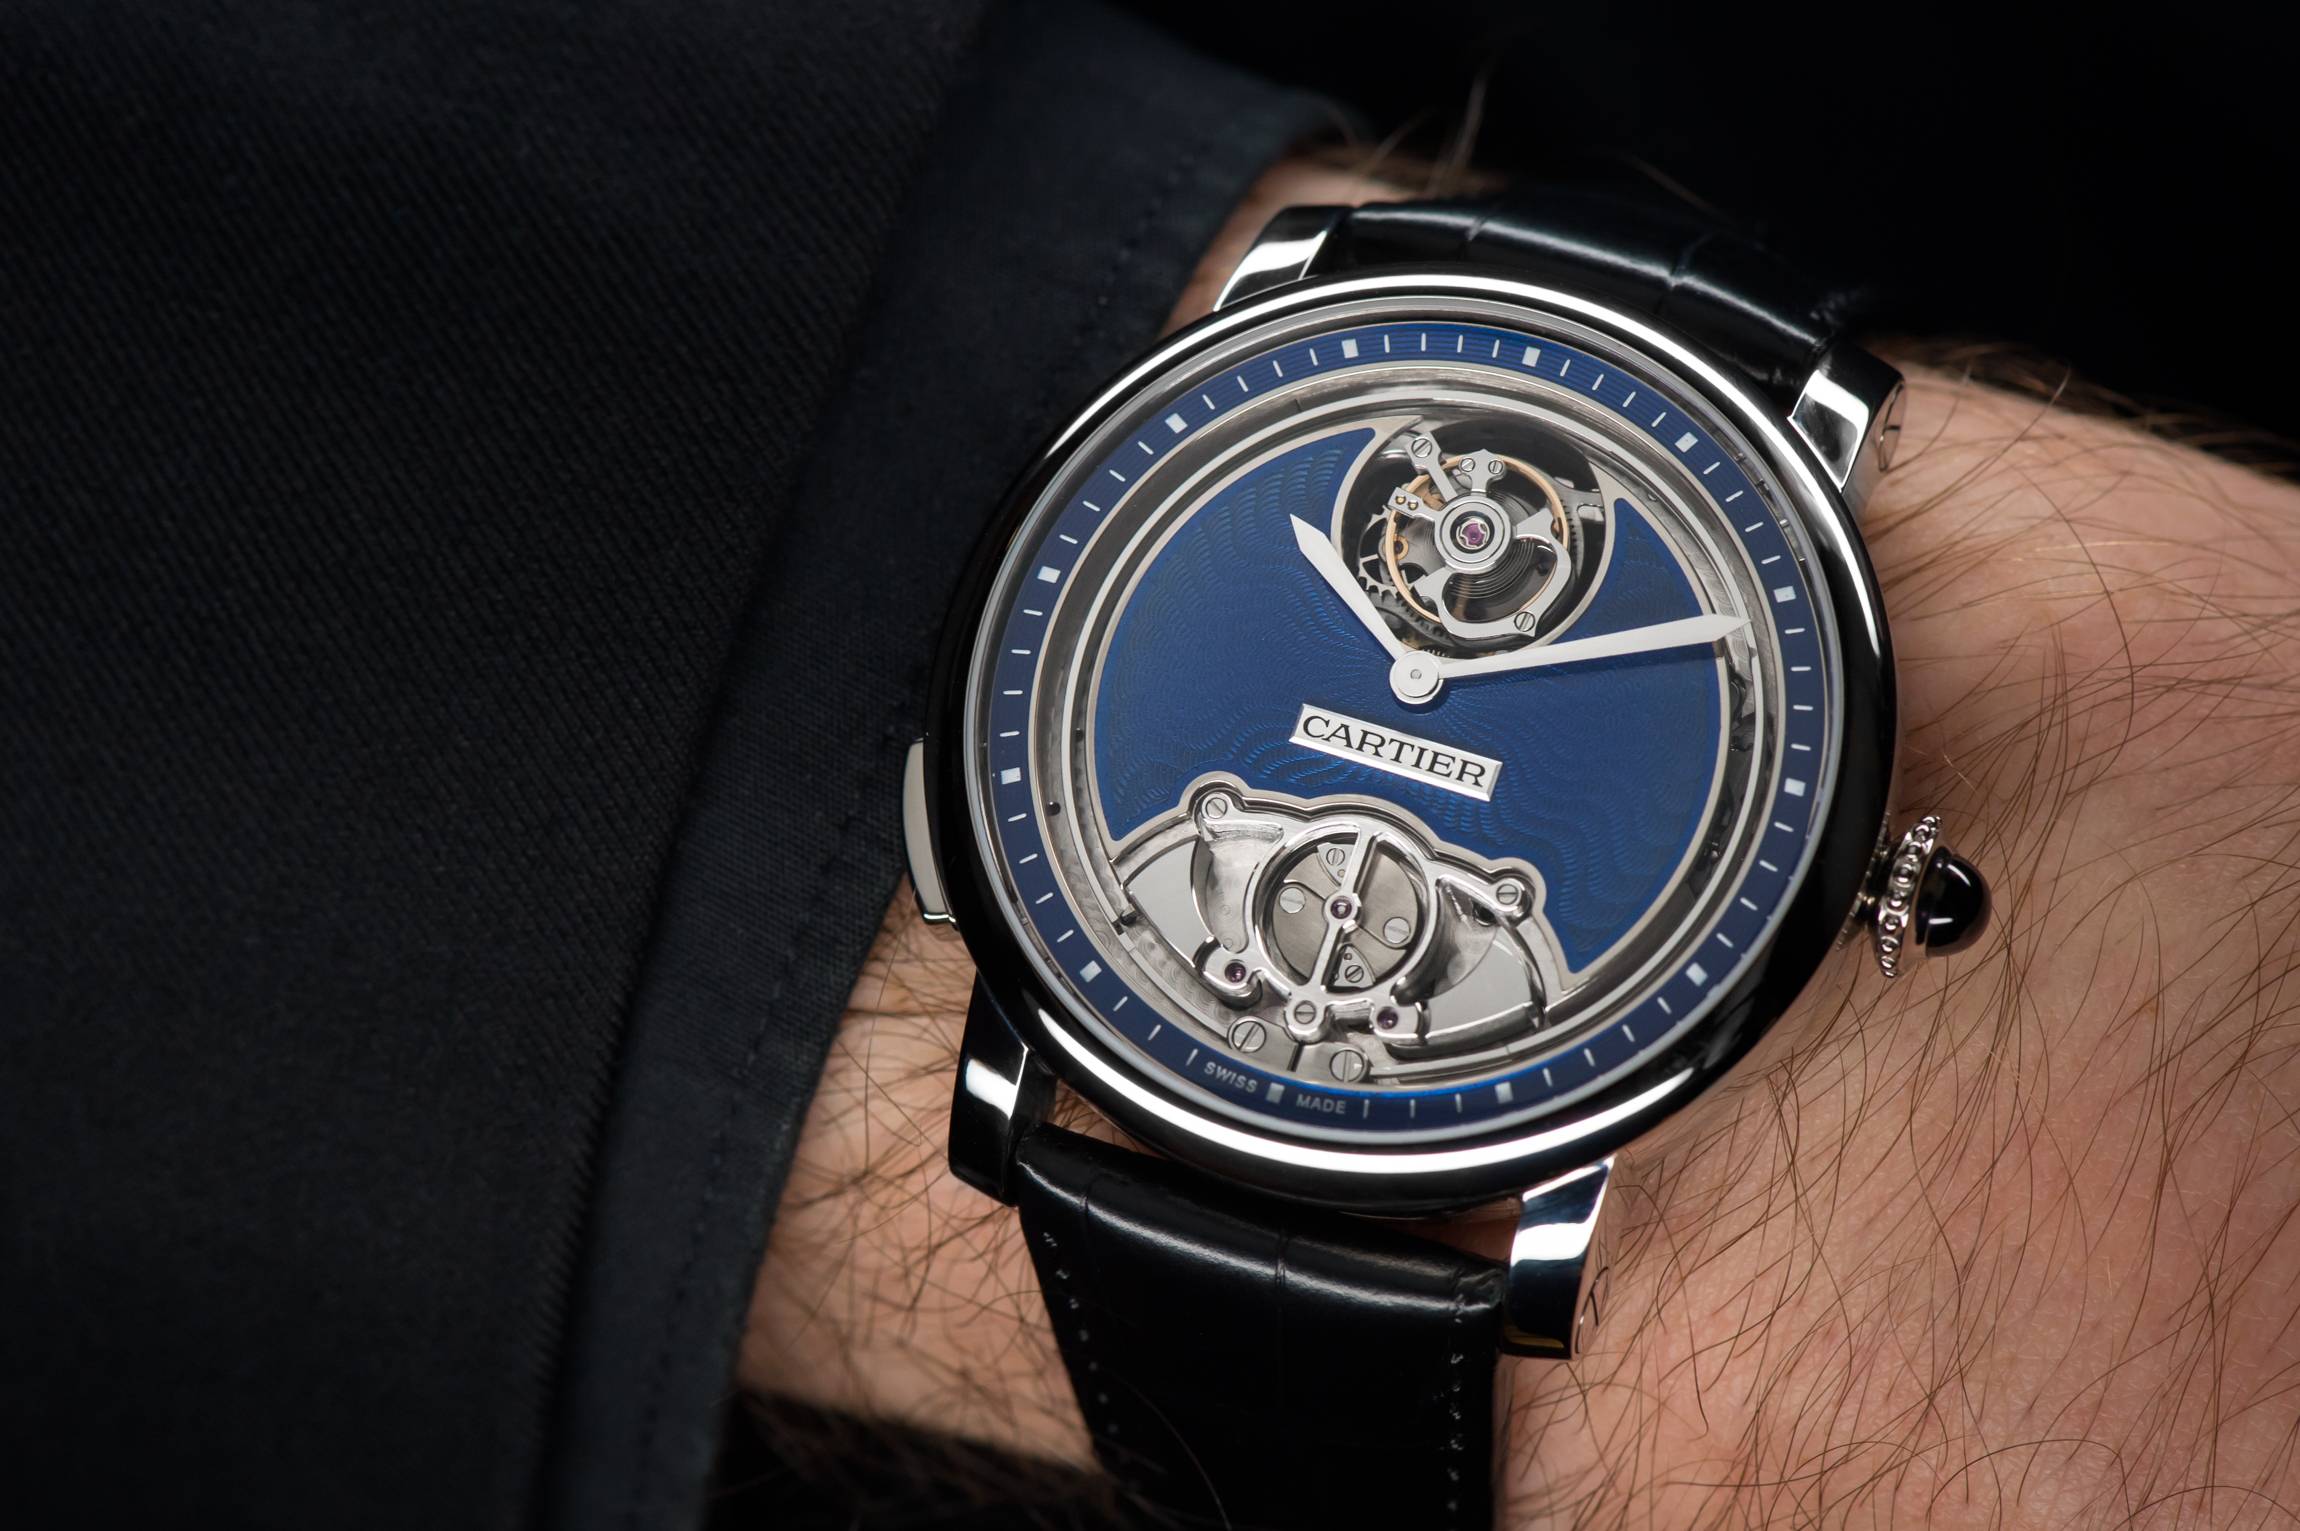 Cartier Rotonde de Cartier Minute Repeater Flying Tourbillon Calibre 9402 MC "Poinçon de genève" certified watch wristshot